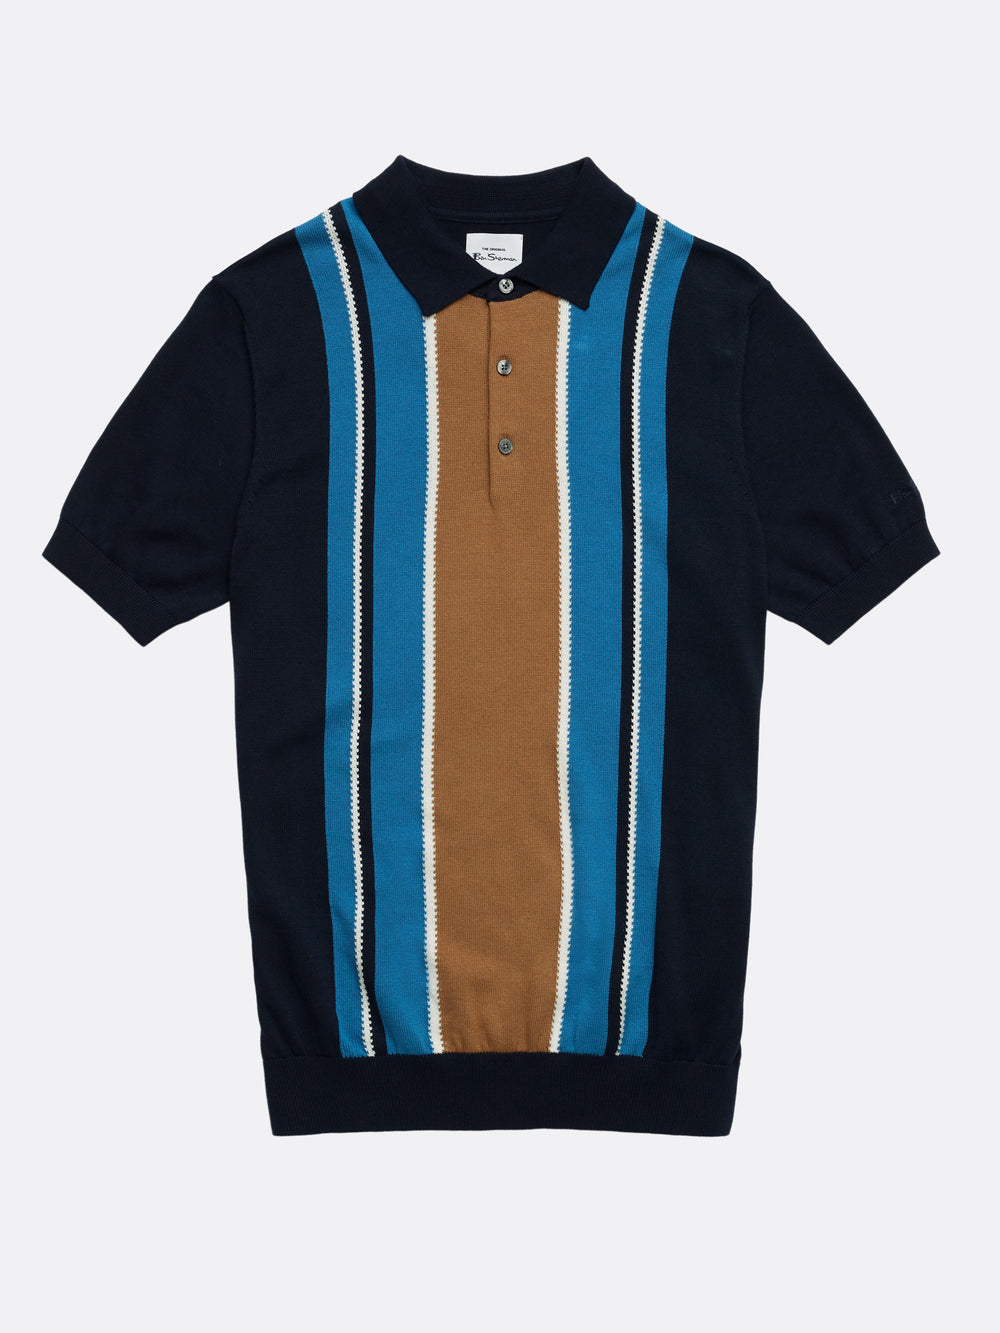 Iconic Vertical Stripe Mod Knit Polo - Dark Navy